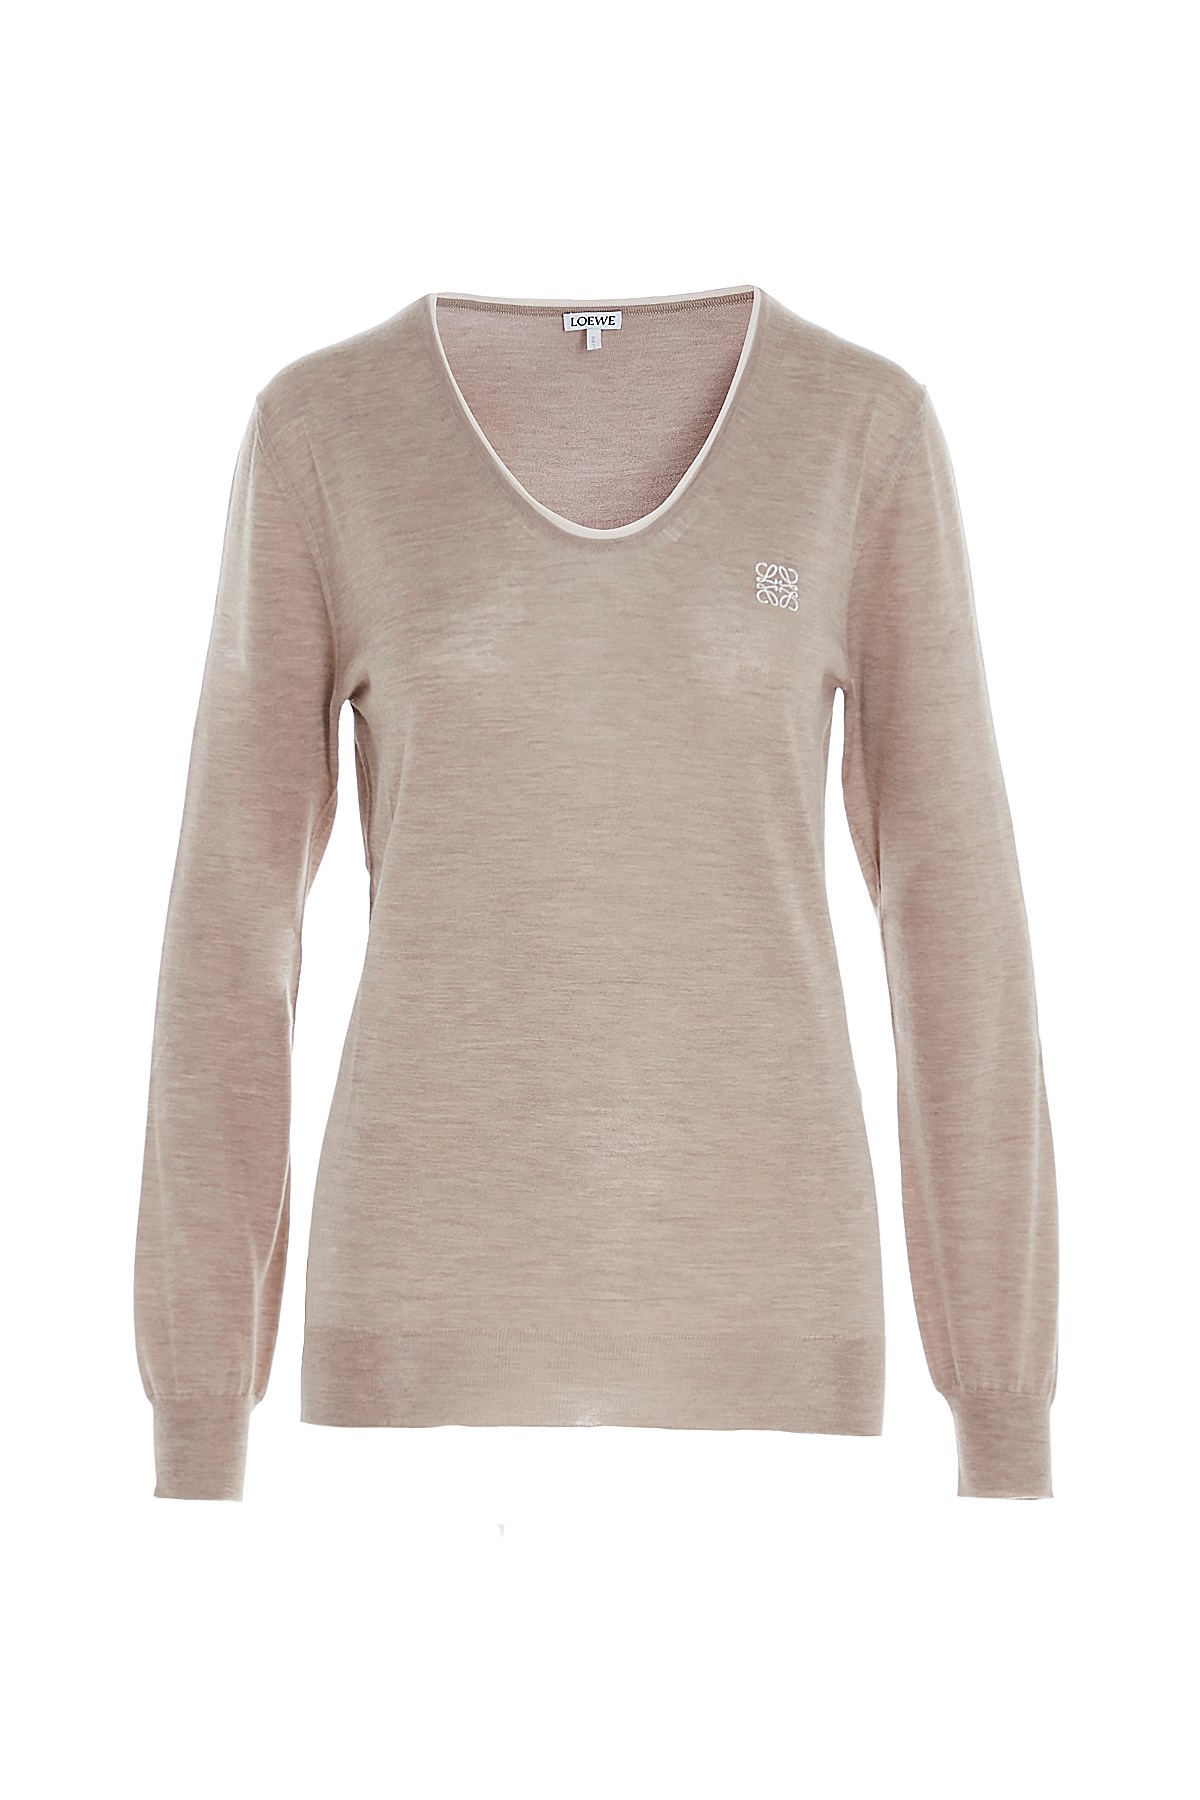 LOEWE 'Anagram' Cashmere Sweater